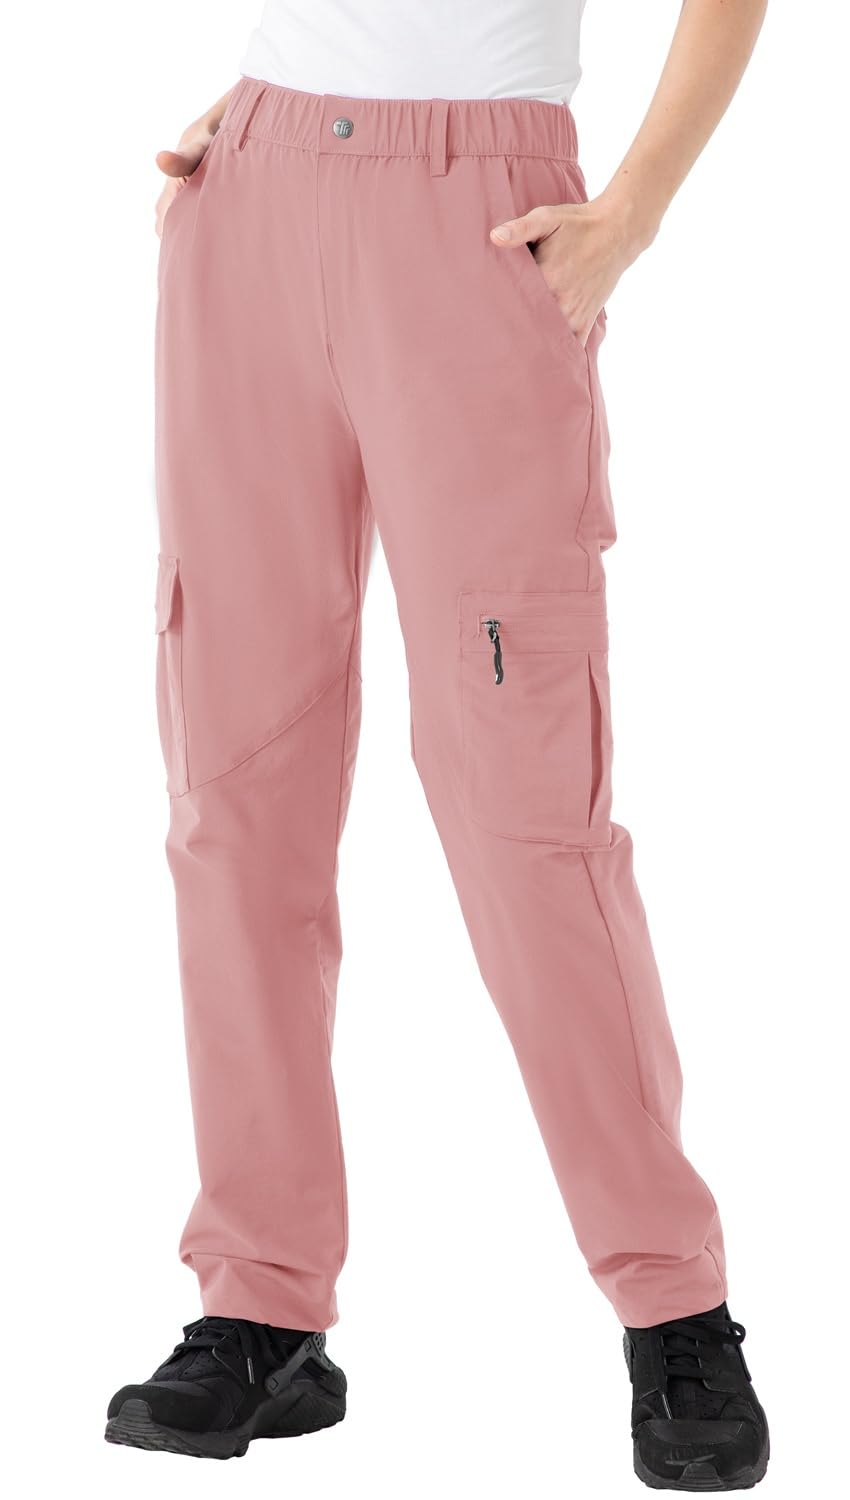 Rdruko Women's Waterproof Hiking Pants Lightweight Quick Dry Travel Fishing Cargo  Pants Pink X-Large